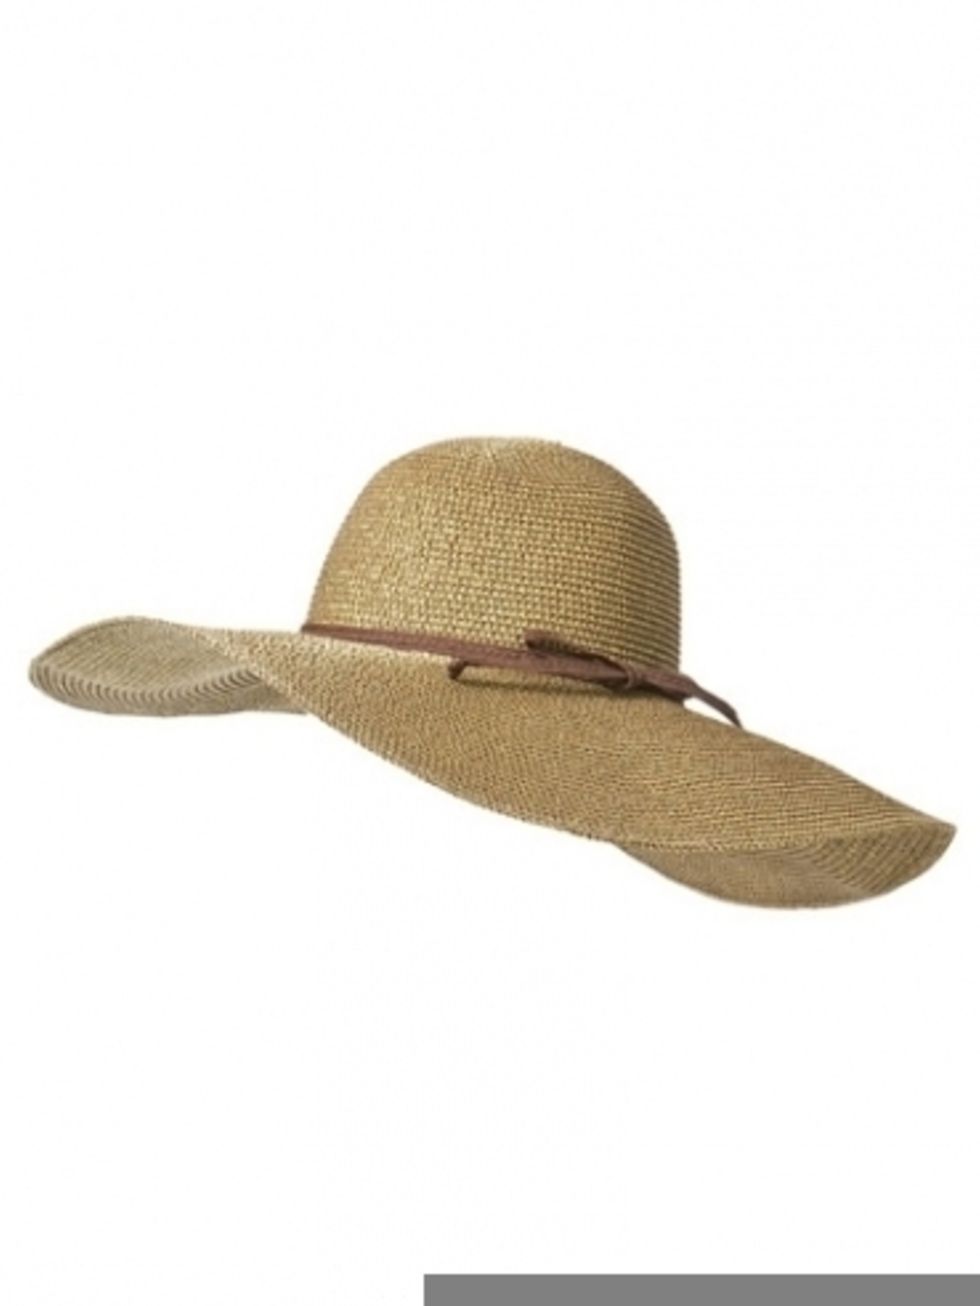 Hat, Brown, Khaki, Fashion accessory, Headgear, Costume accessory, Costume hat, Tan, Beige, Sun hat, 